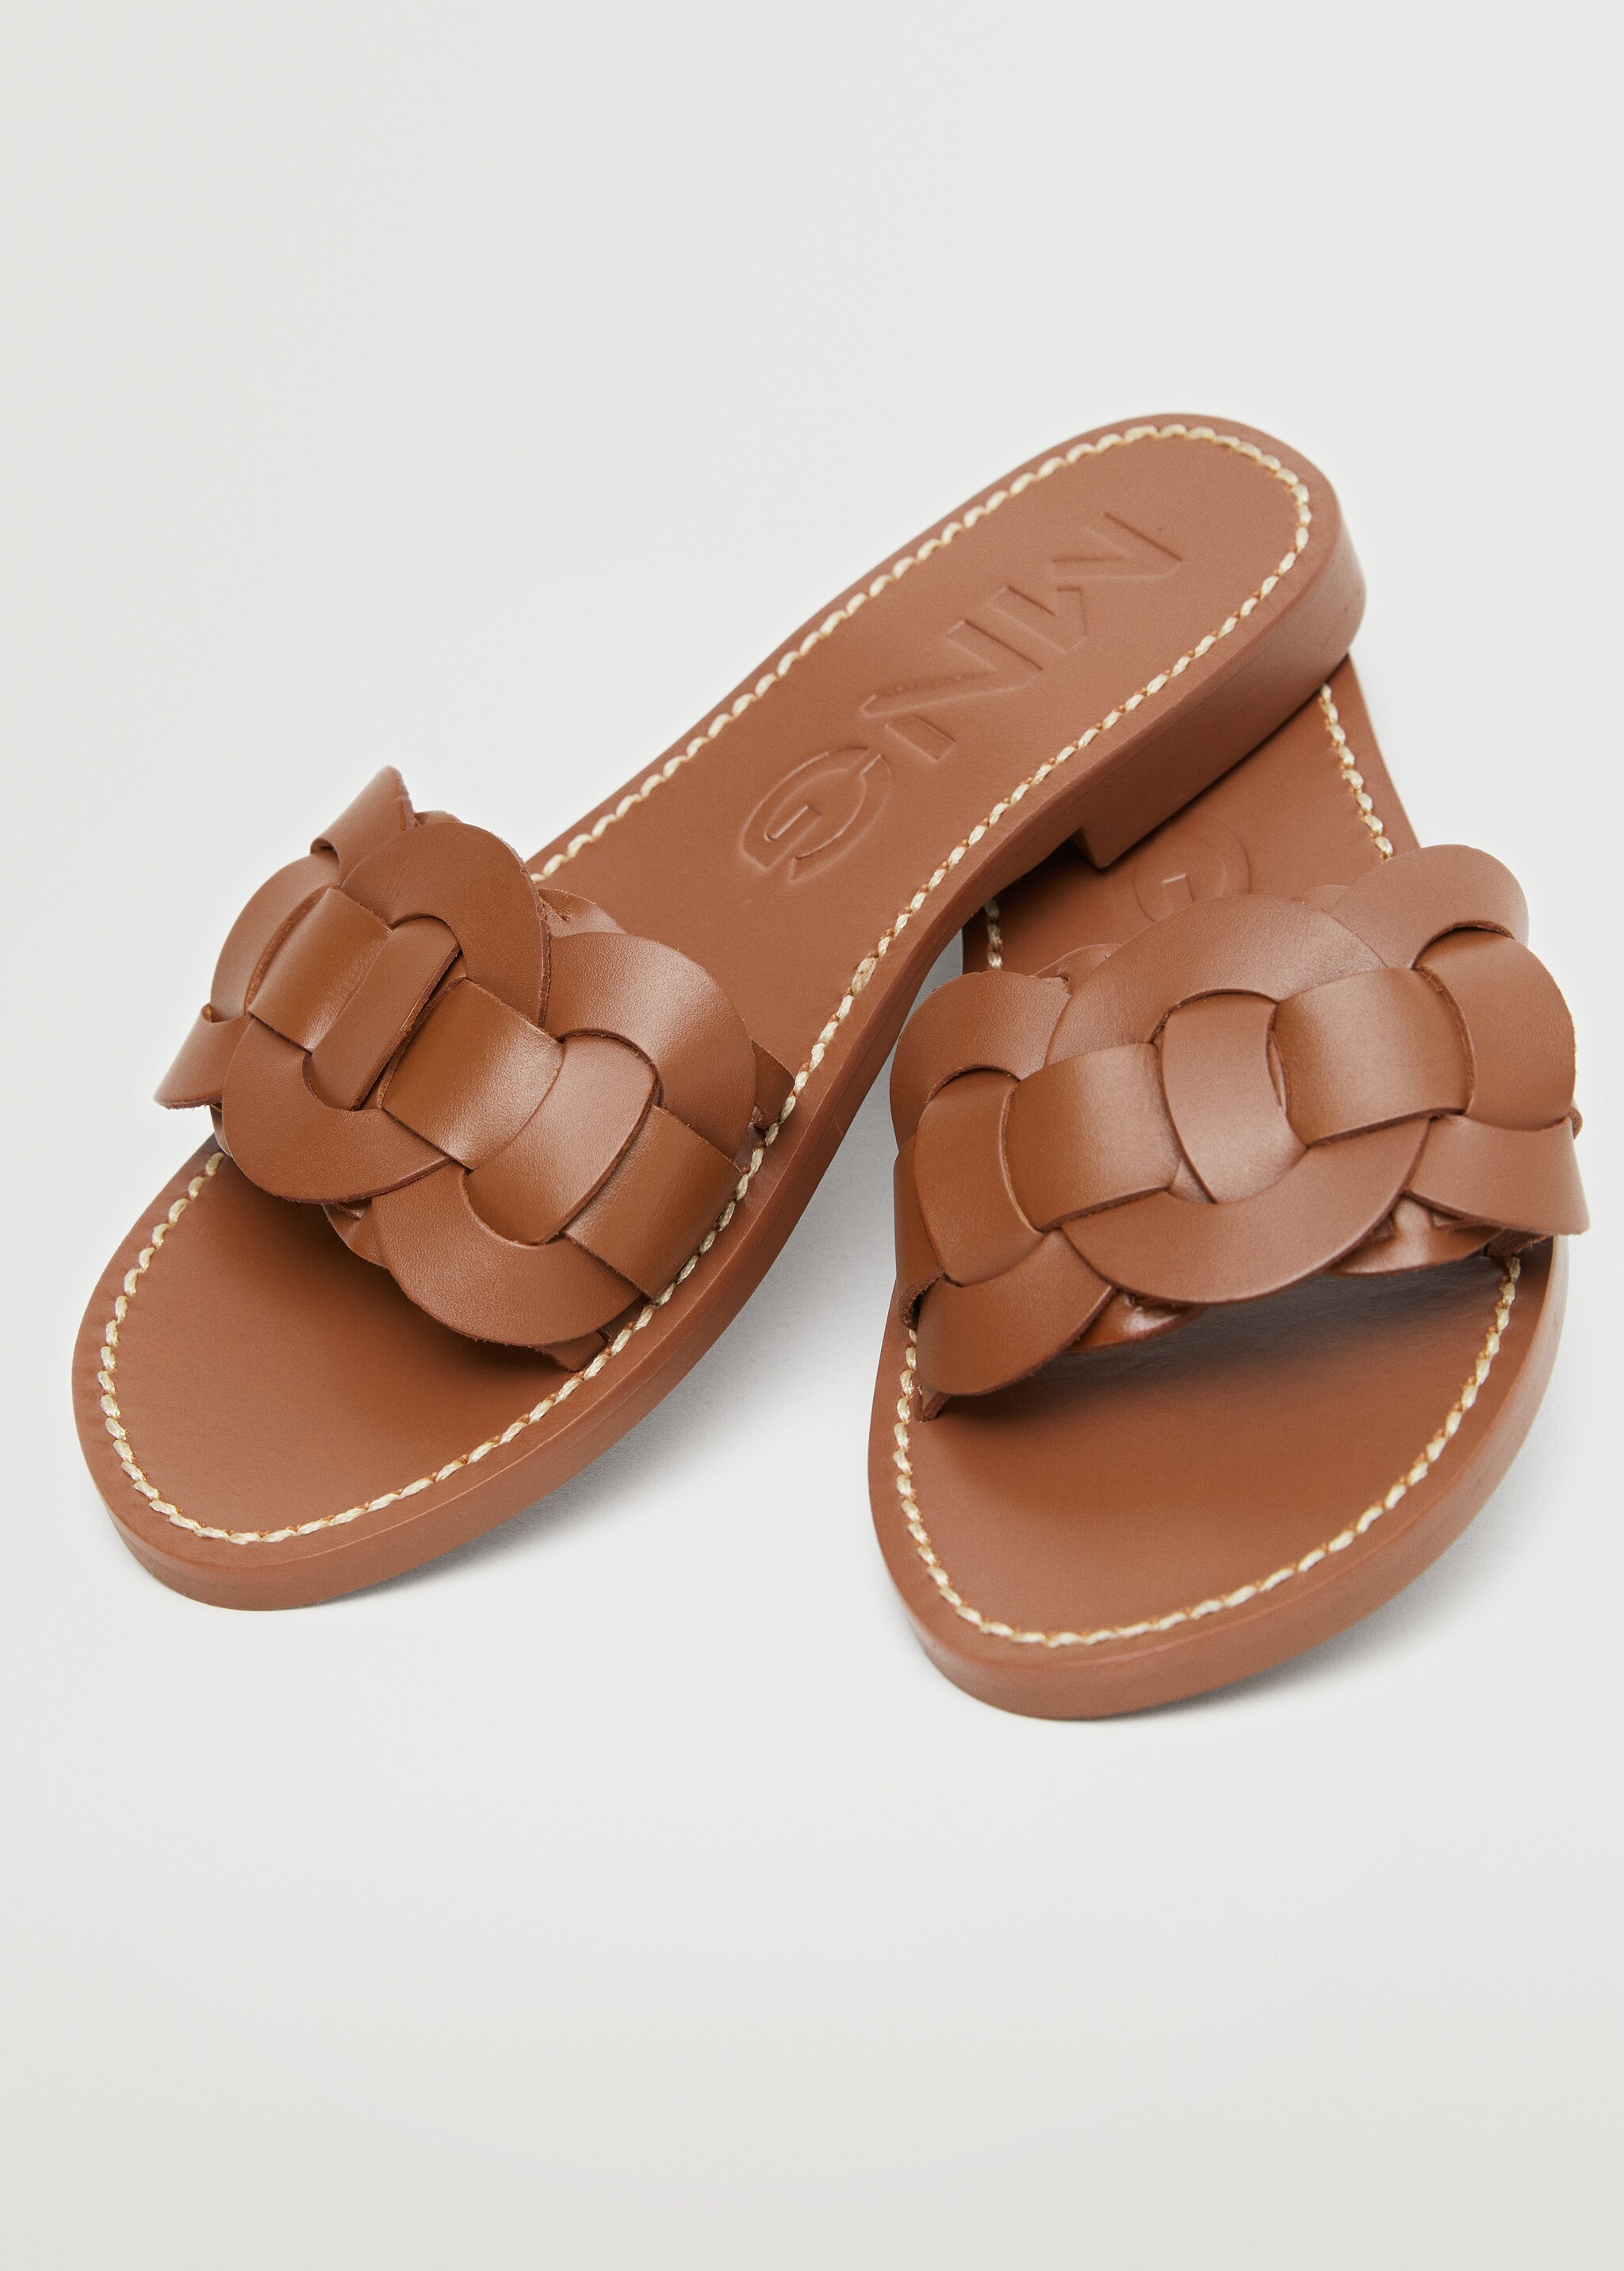 Leather braided sandals - Medium plane